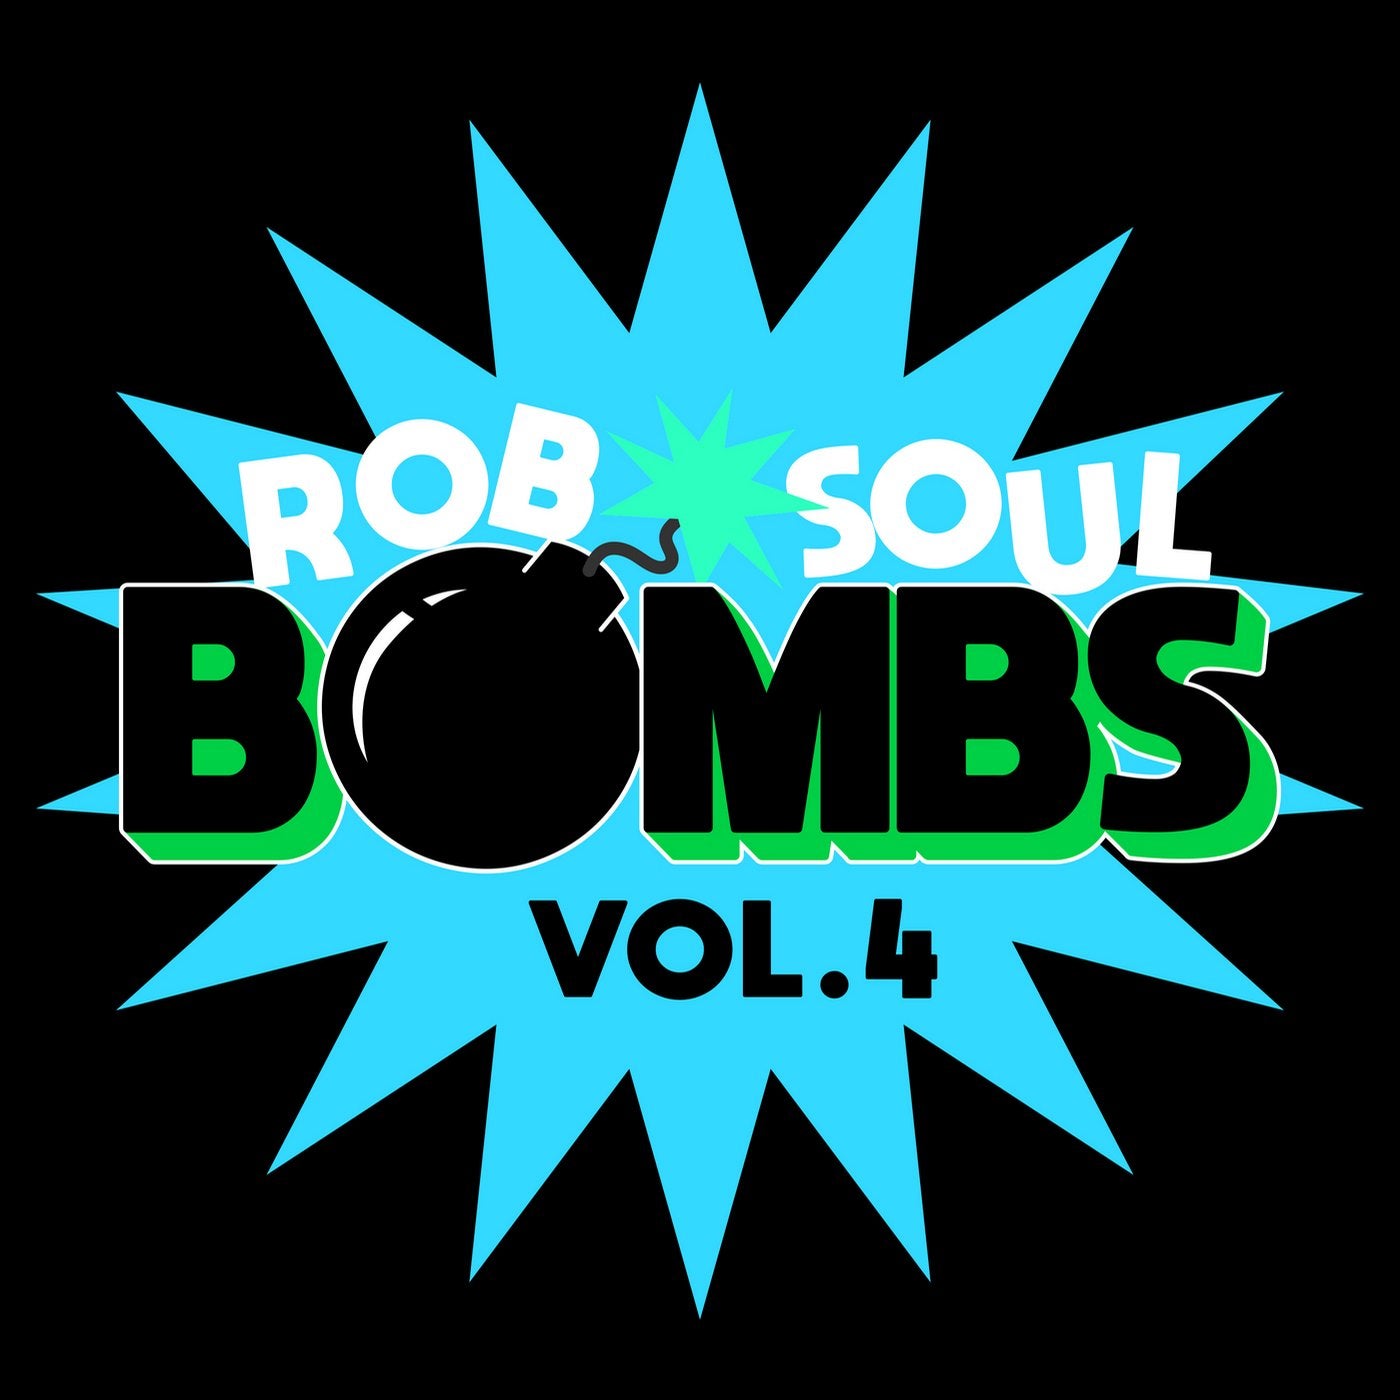 Robsoul Bombs Vol.4